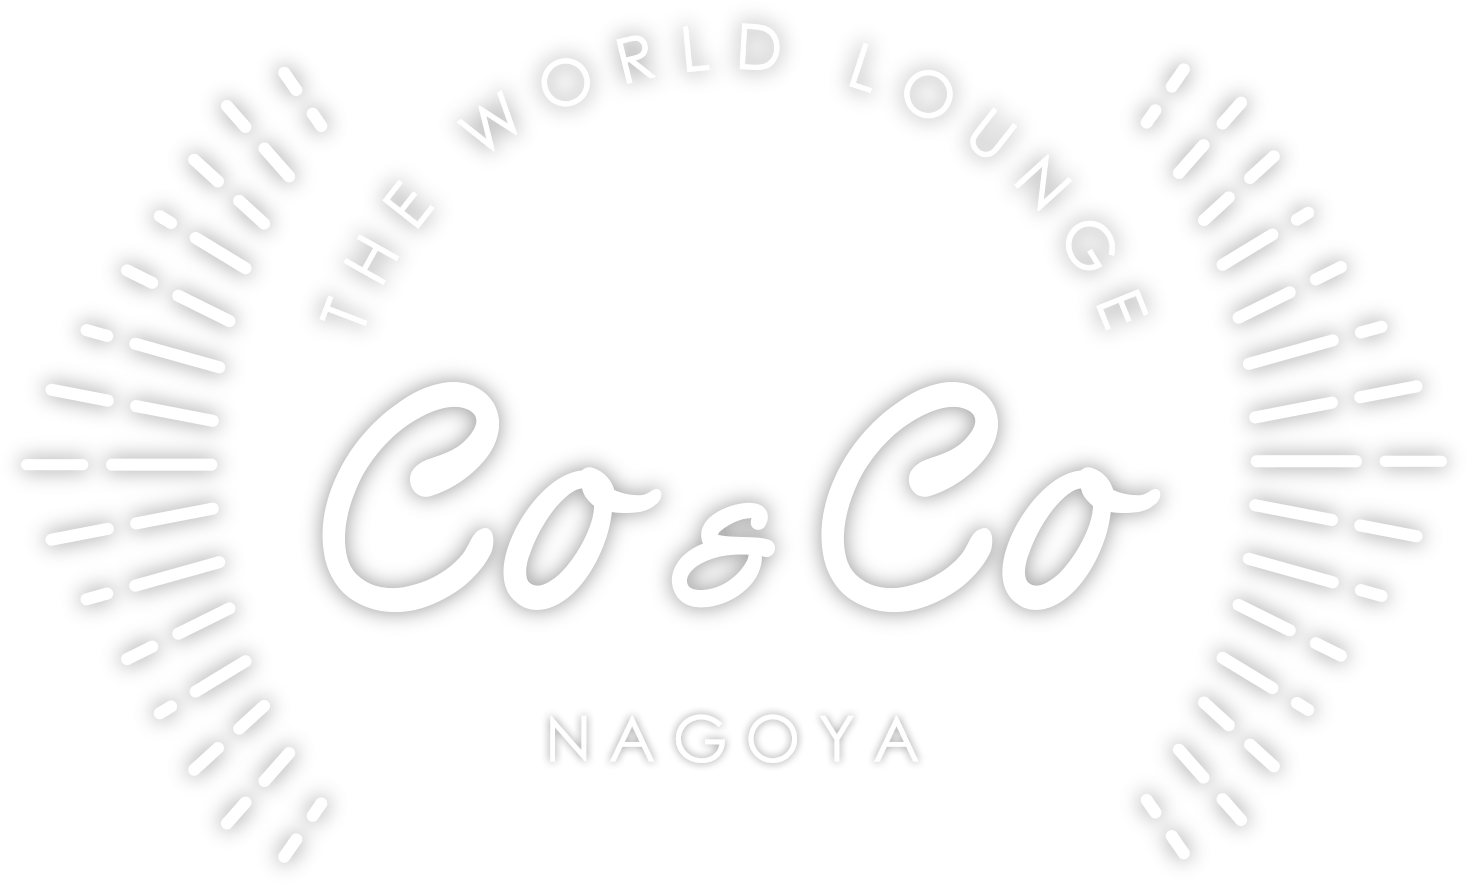 The World Lounge Co&Co Nagoya